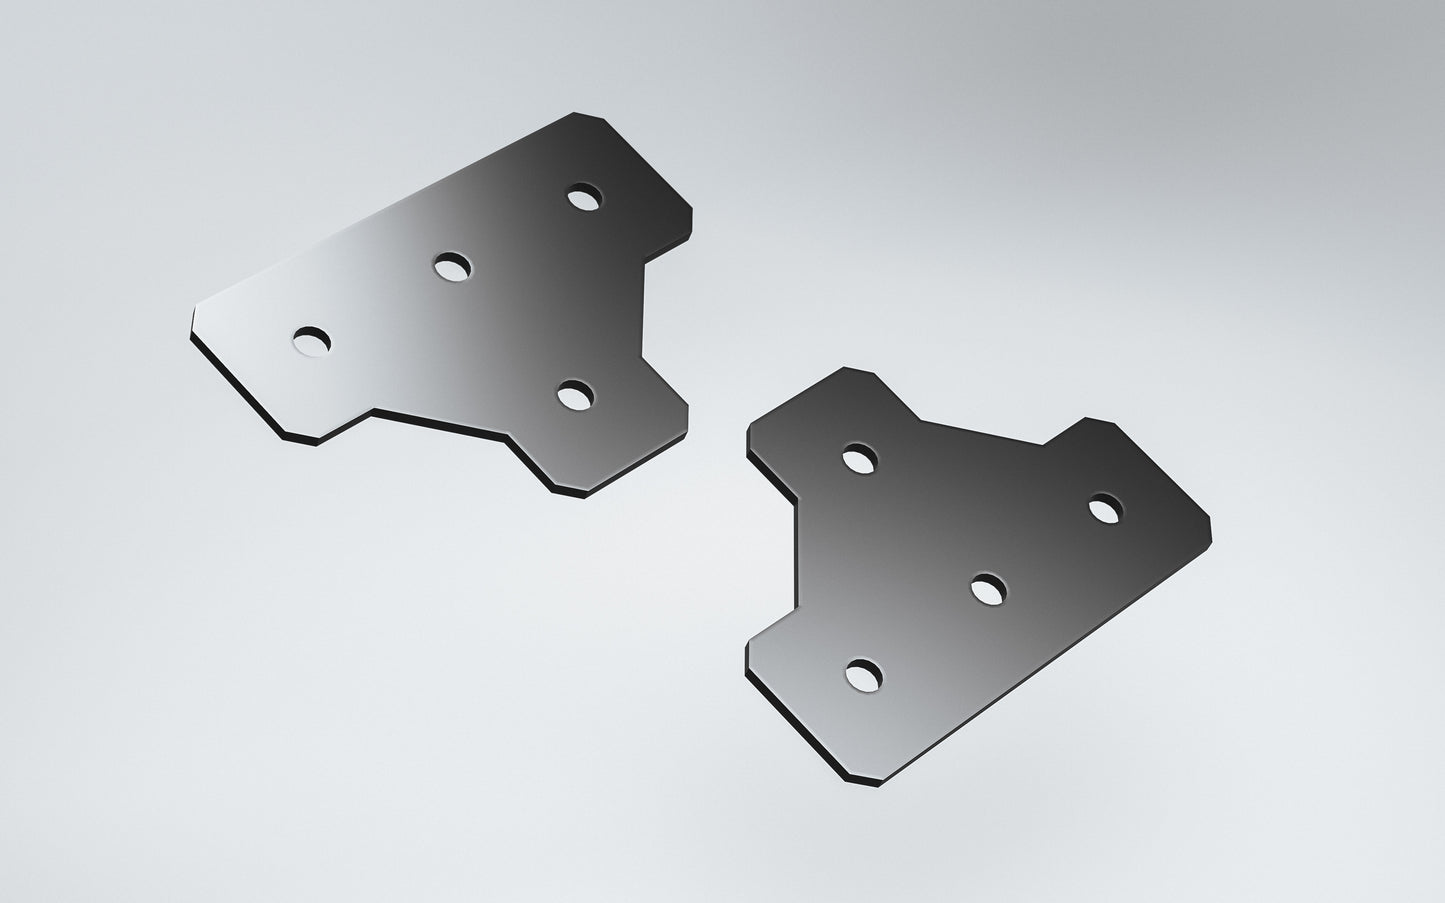 Pair of DOT t-brackets to connect Aluminium bars